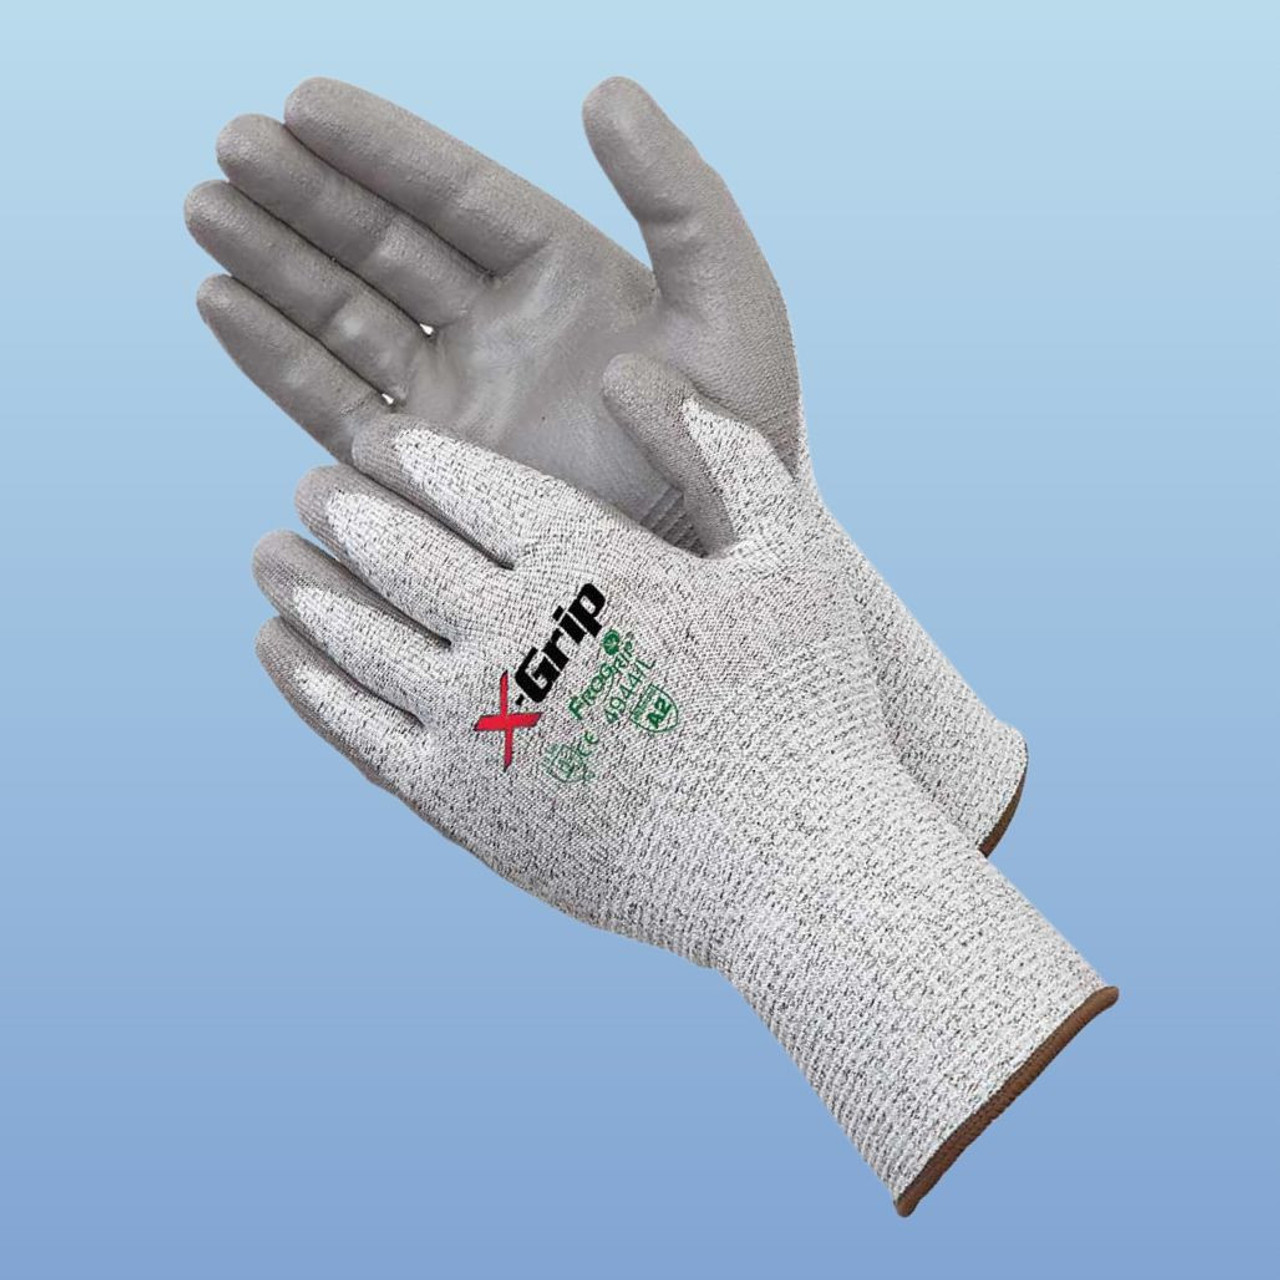 https://cdn11.bigcommerce.com/s-sb8f5ei7ew/images/stencil/1280x1280/products/8983/25235/liberty-safety-x-grip-cut-resistant-polyurethane-coated-glove-xs-sm-1pr__02411.1680741320.jpg?c=2